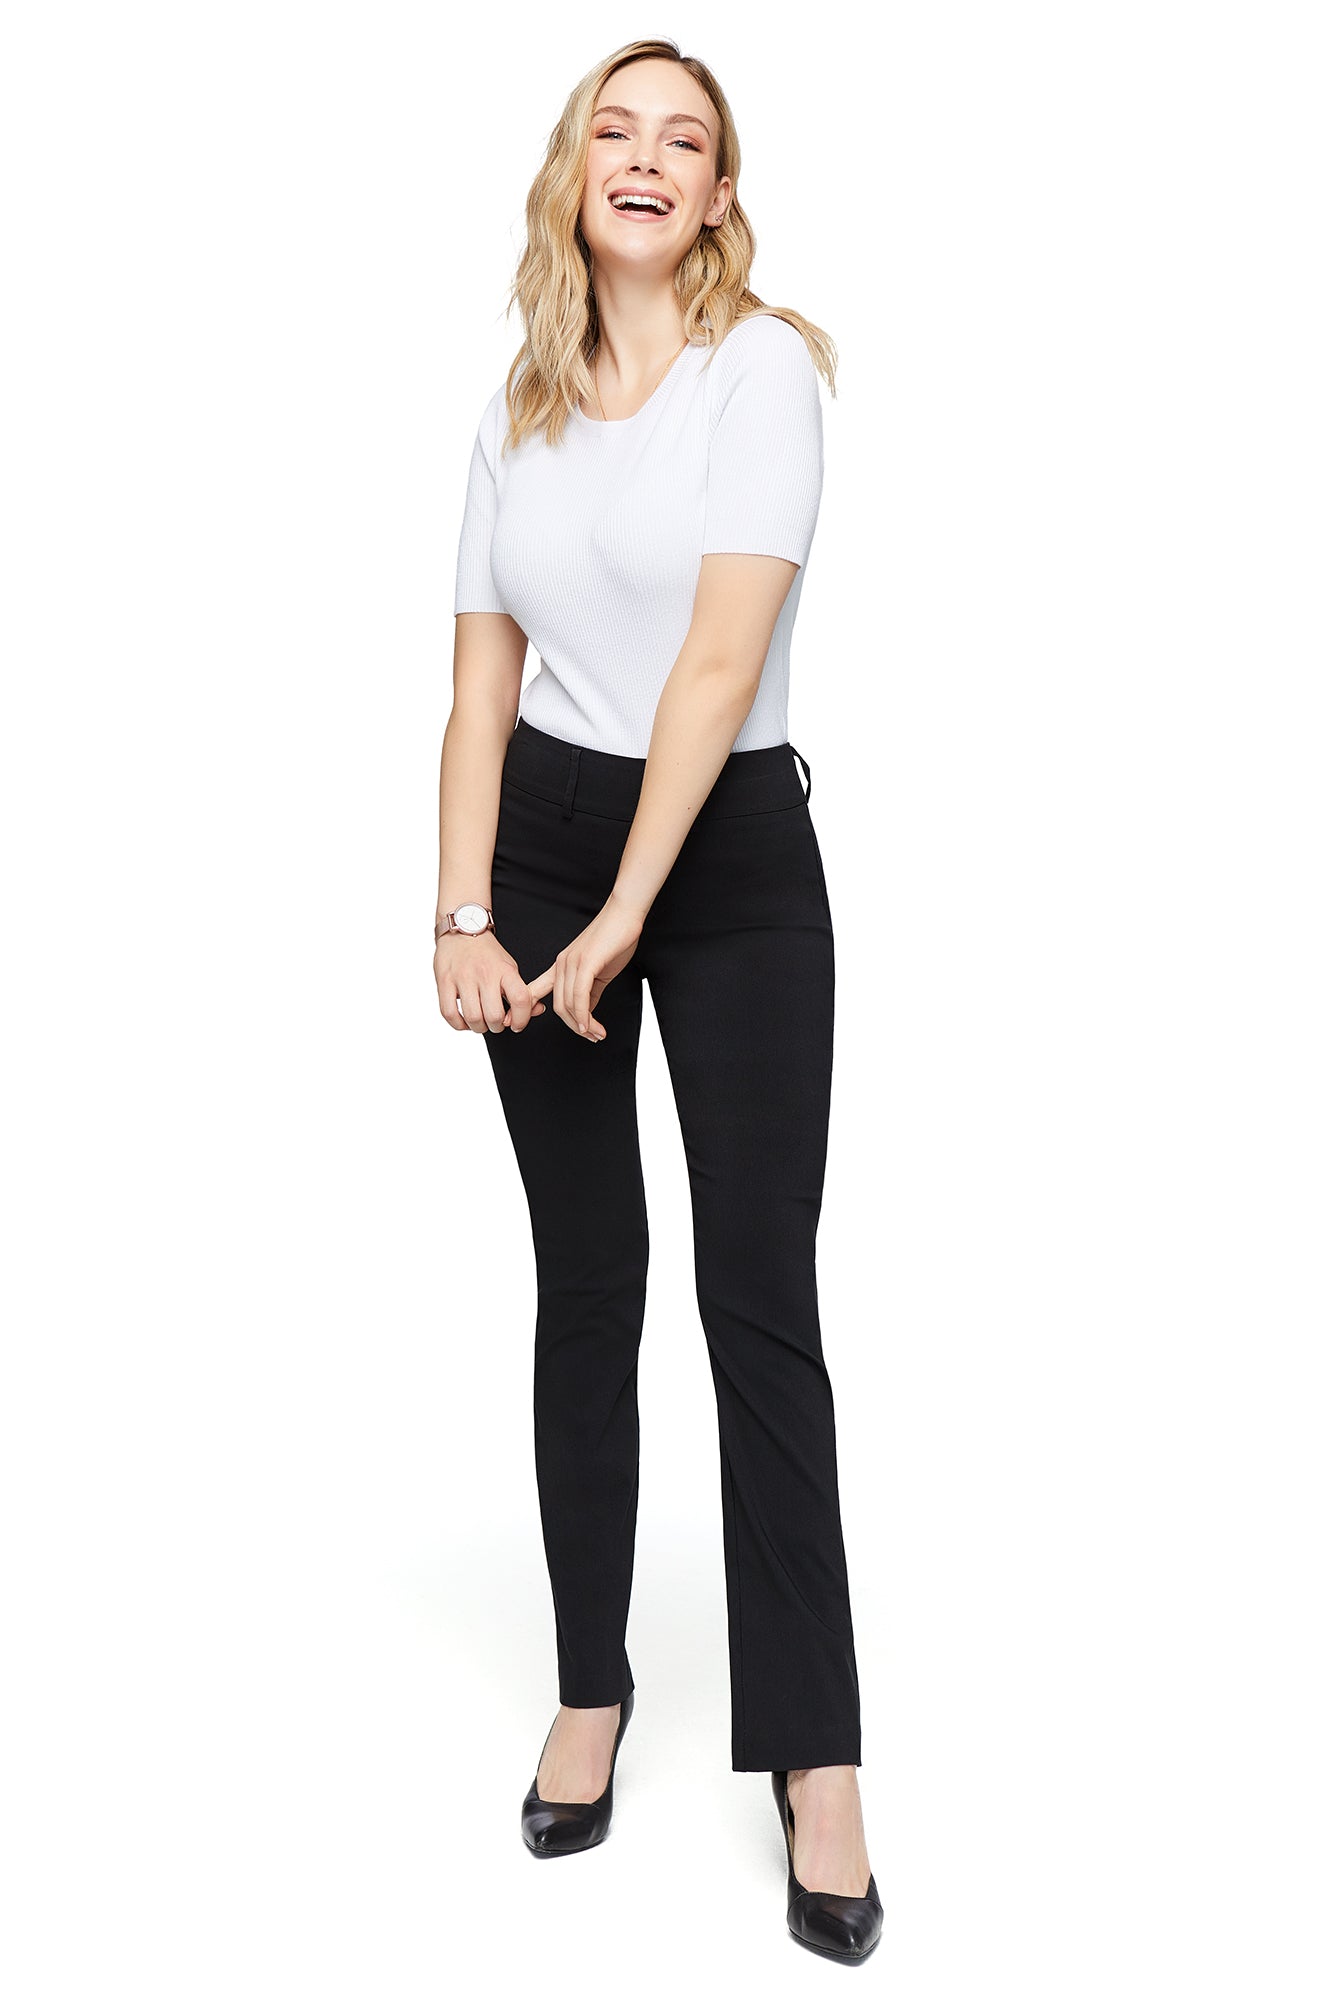 Marlie Black Slimming Pants – Elegant and Timeless